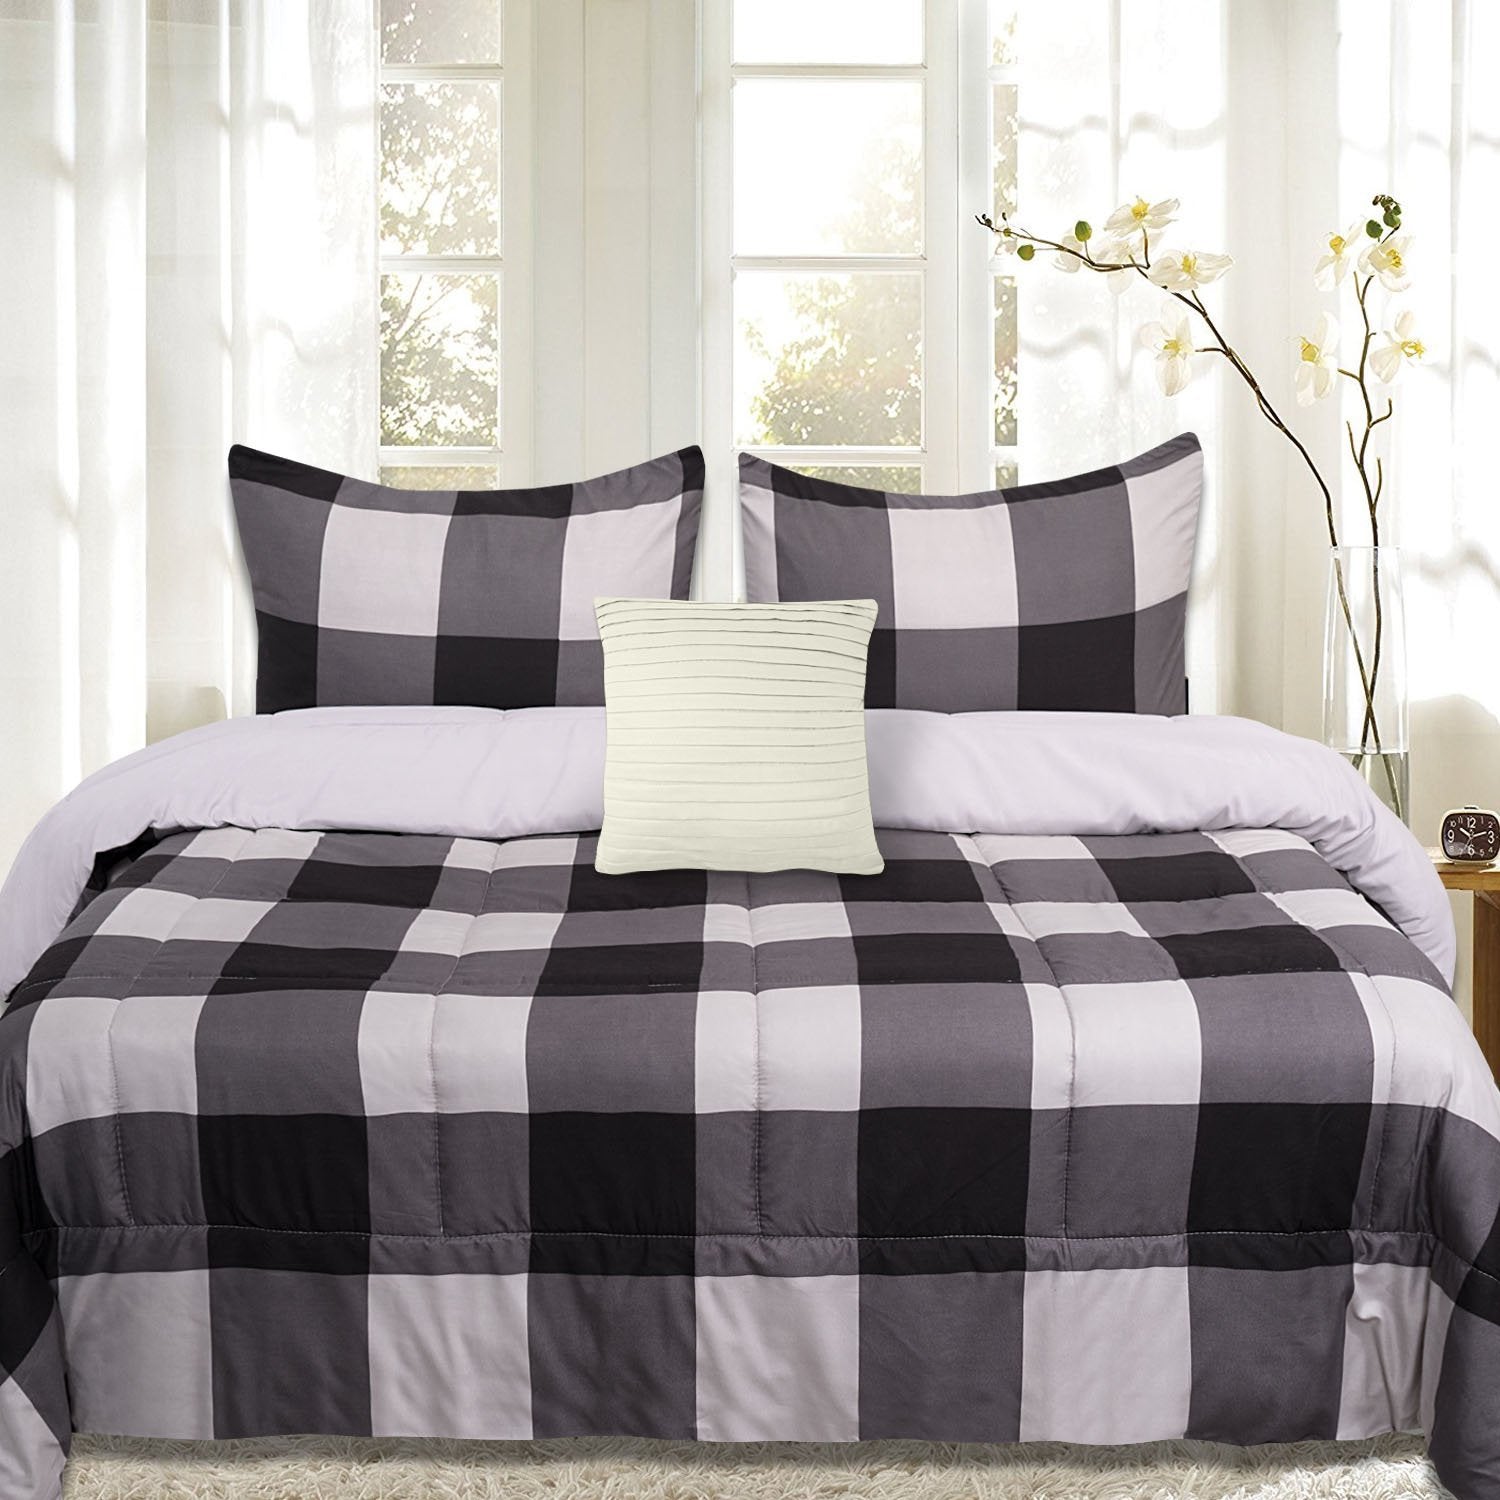 Buffalo check black and white comforter set lifestyle front